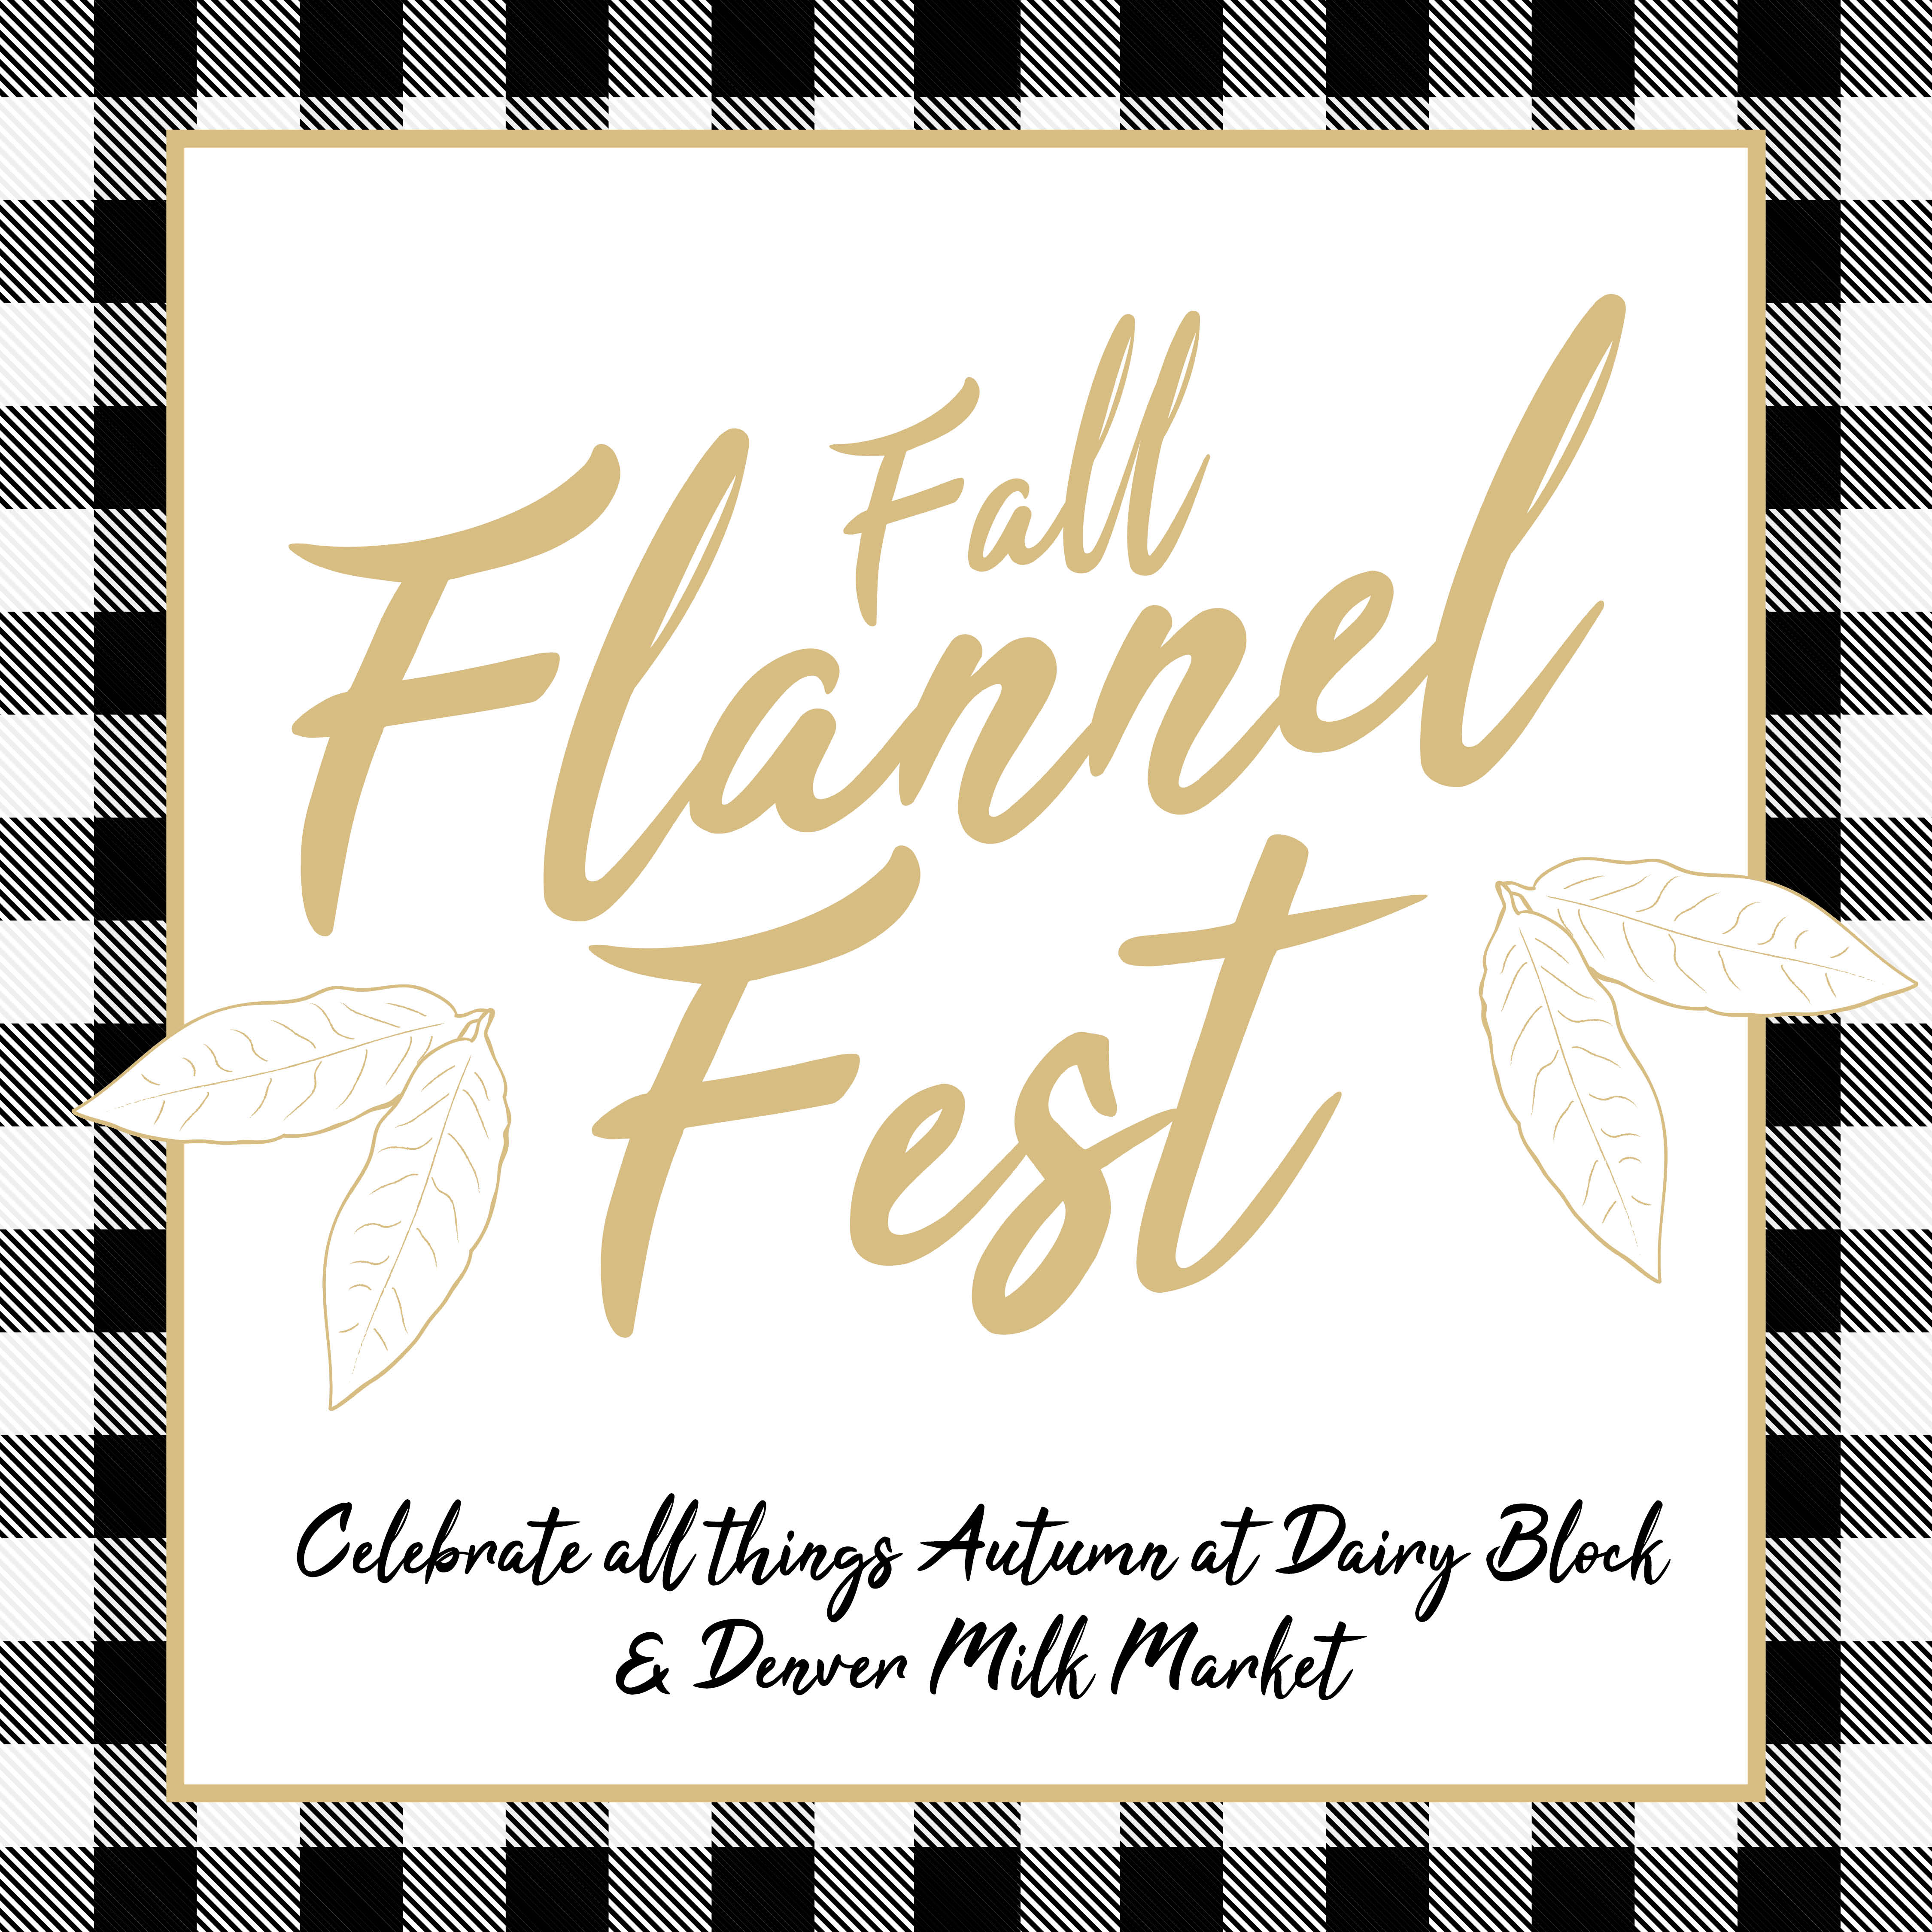 Fall Flannel Fest